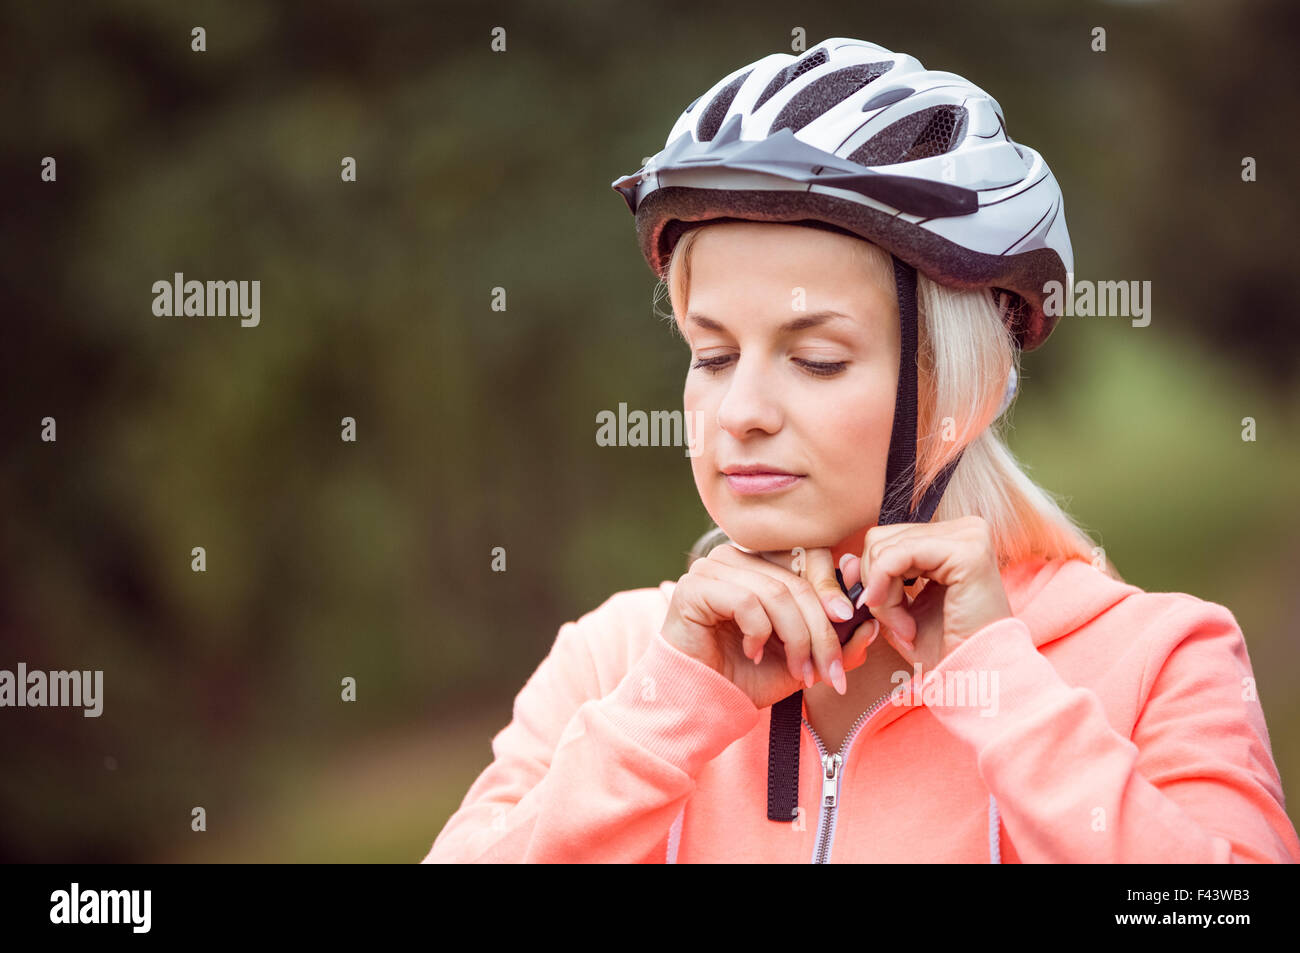 Woman fastening her bike helmet Stock Photo